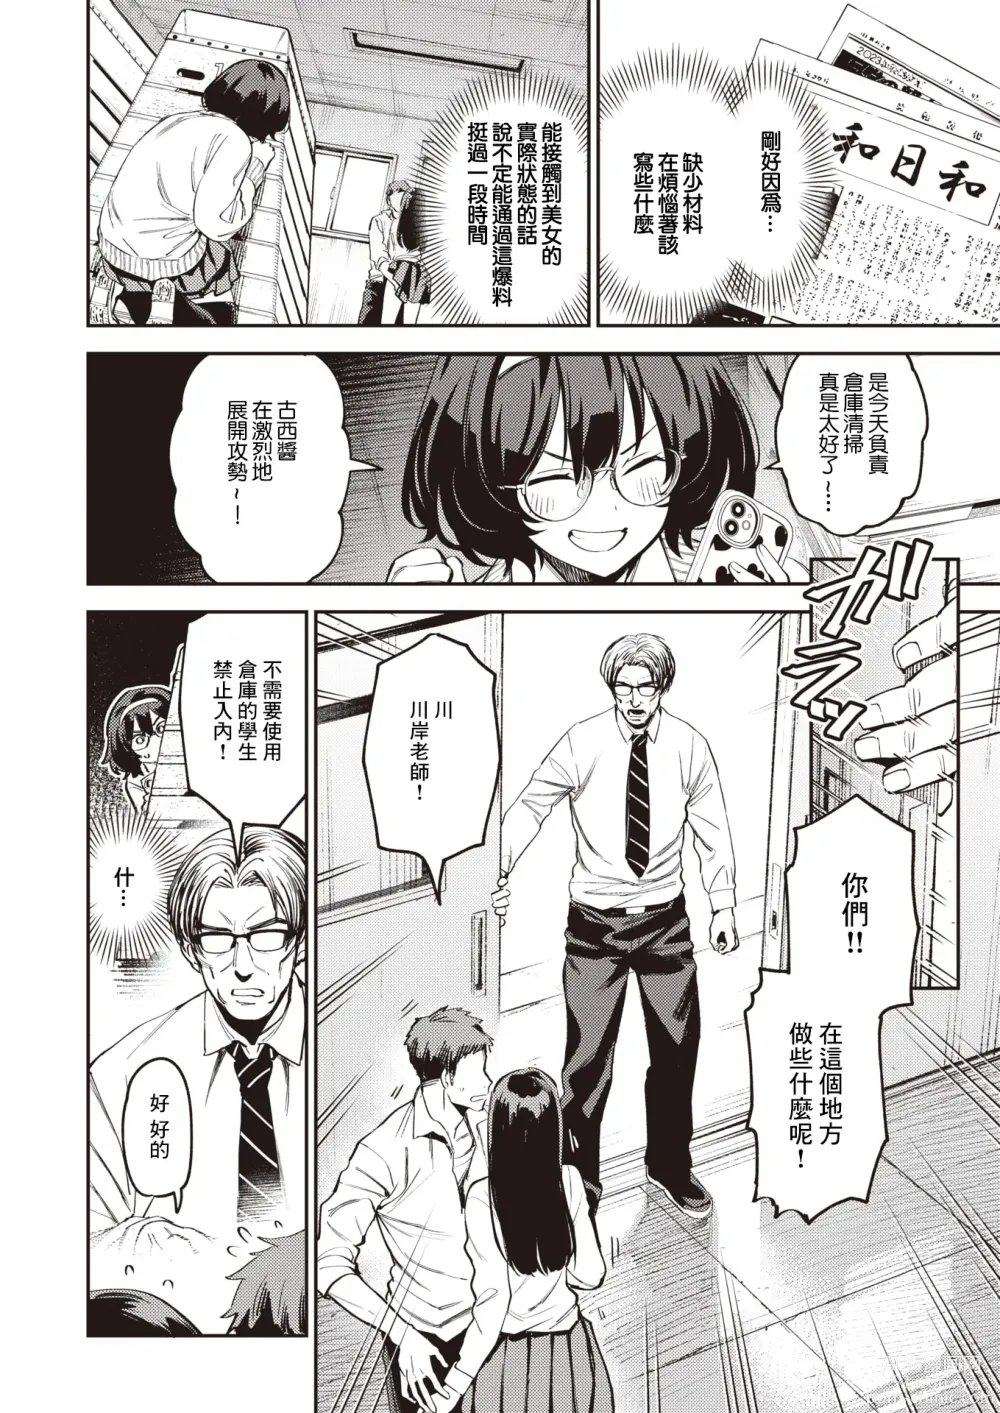 Page 2 of manga Wakarase Filming